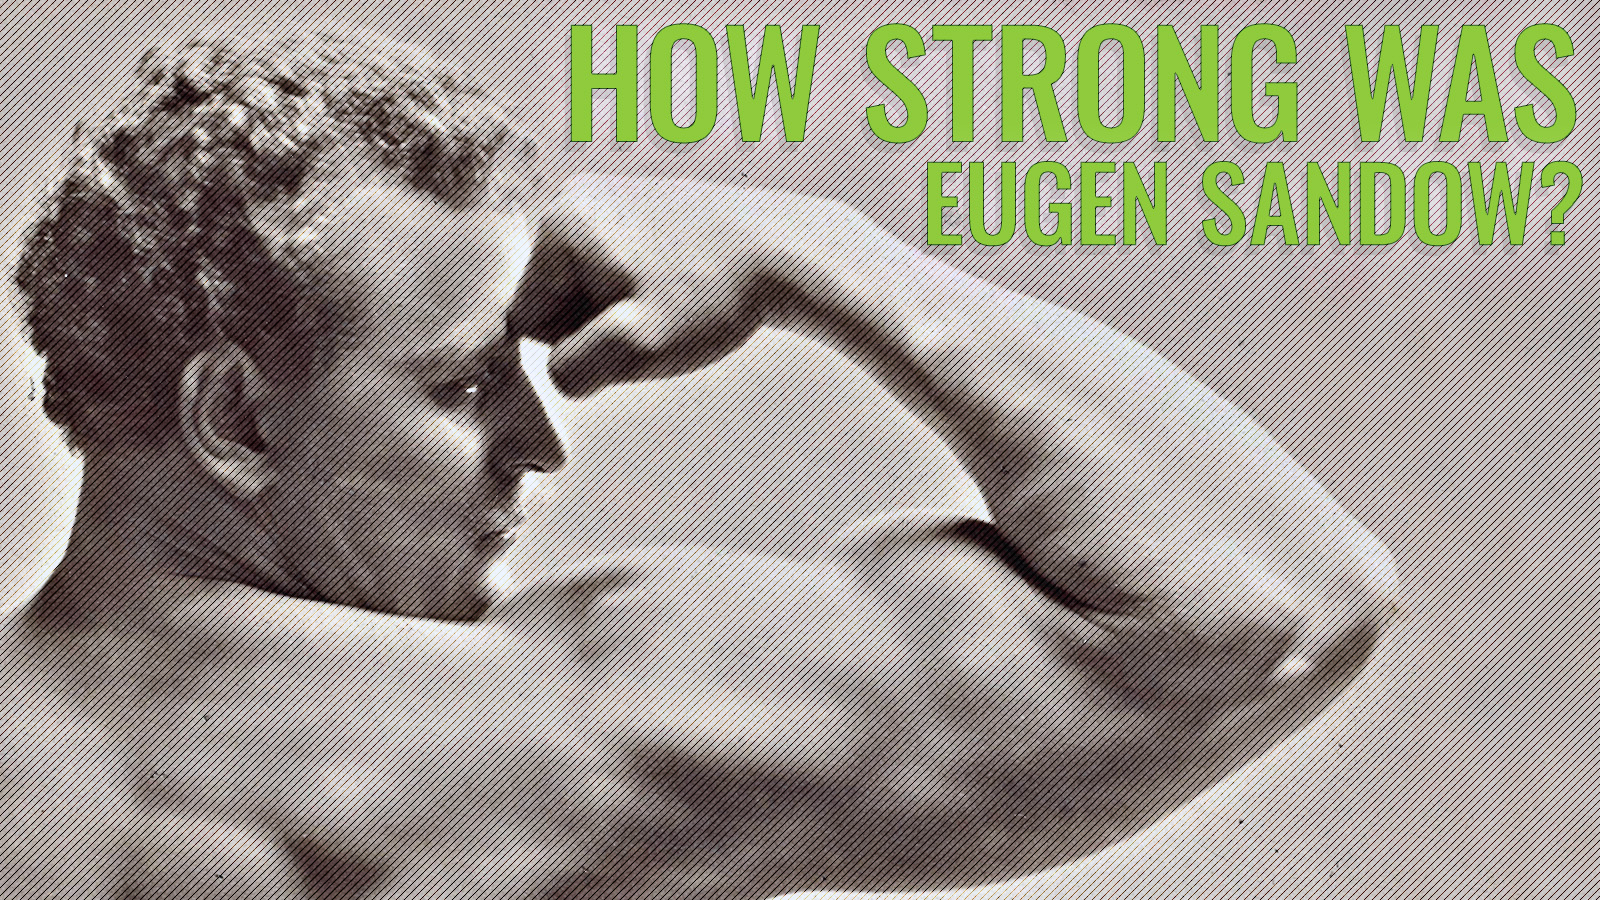 Eugen Sandow's body was all his own work - More Sport - Inside Sport